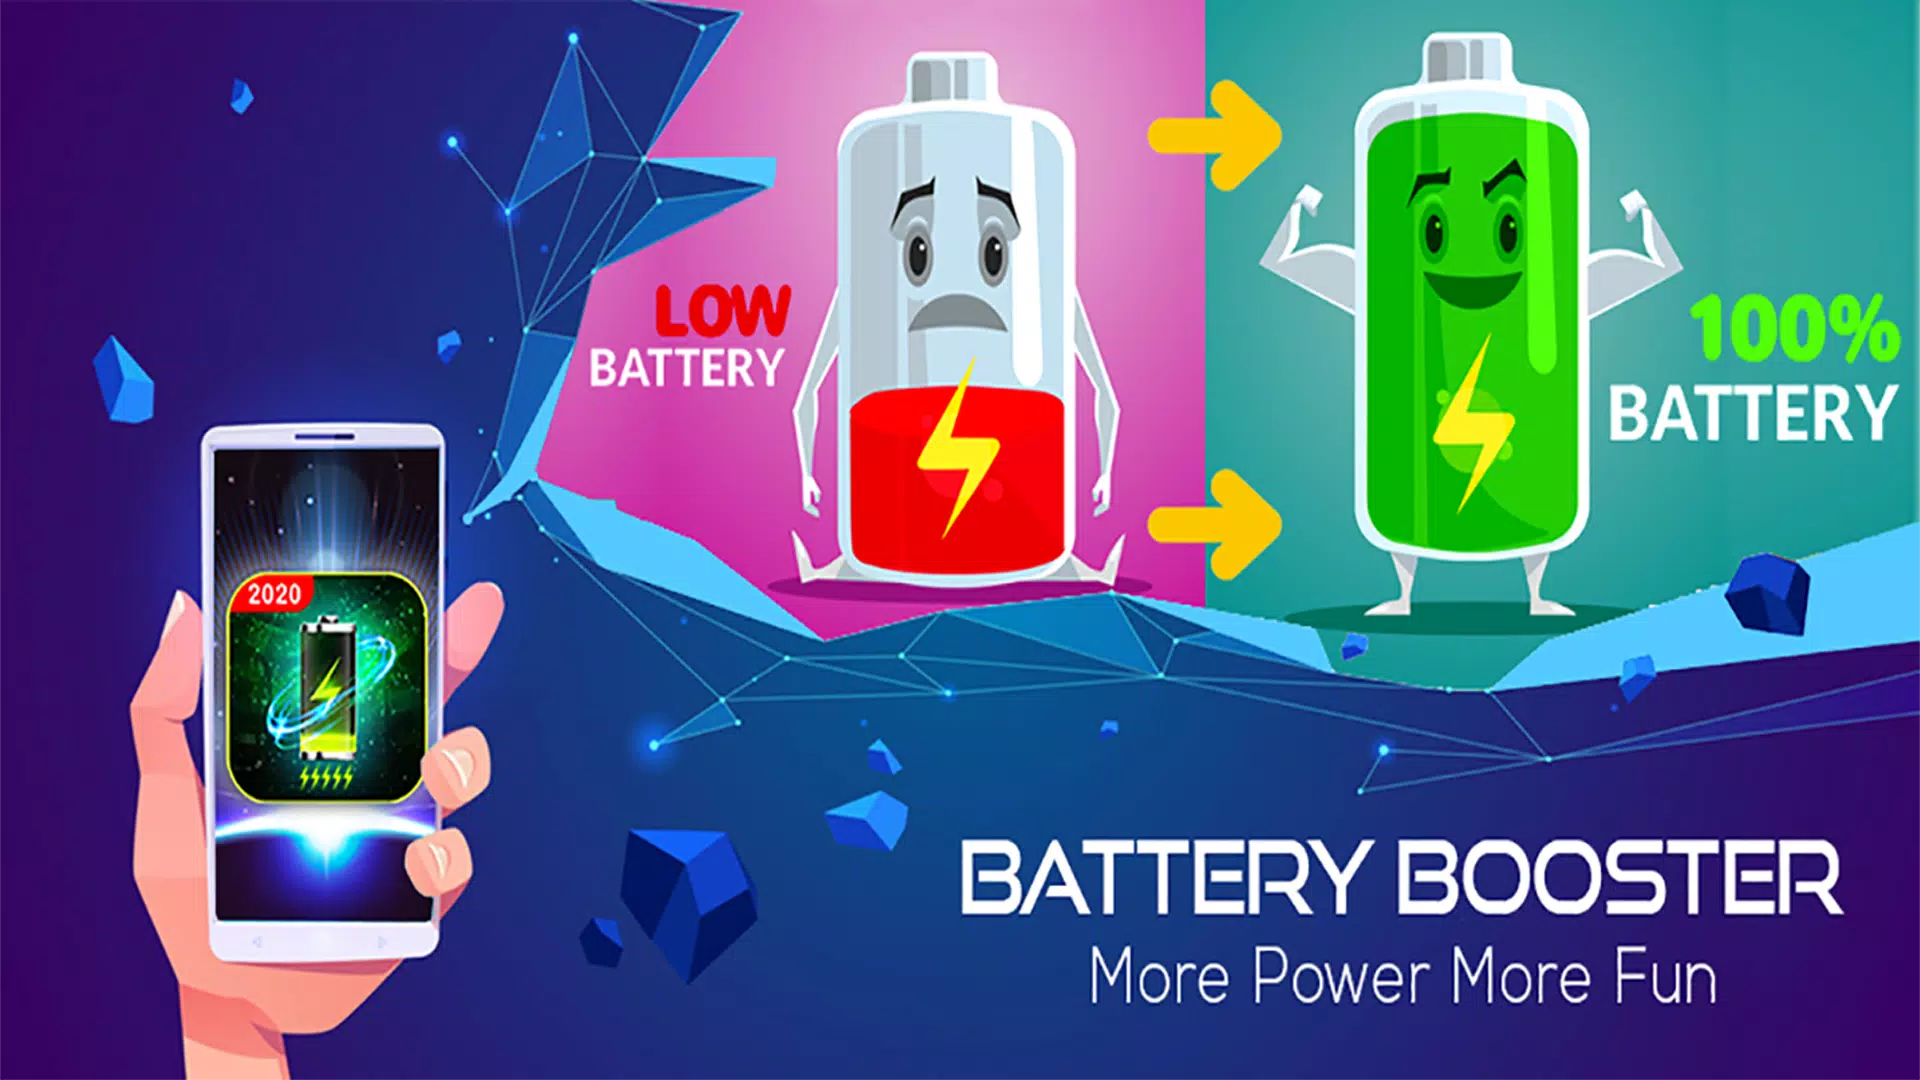 Чардж бустер. Аккумулятор f.o.r. Booster. Boost Battery. Как выбрать зарядное для смартфона super fast charge.